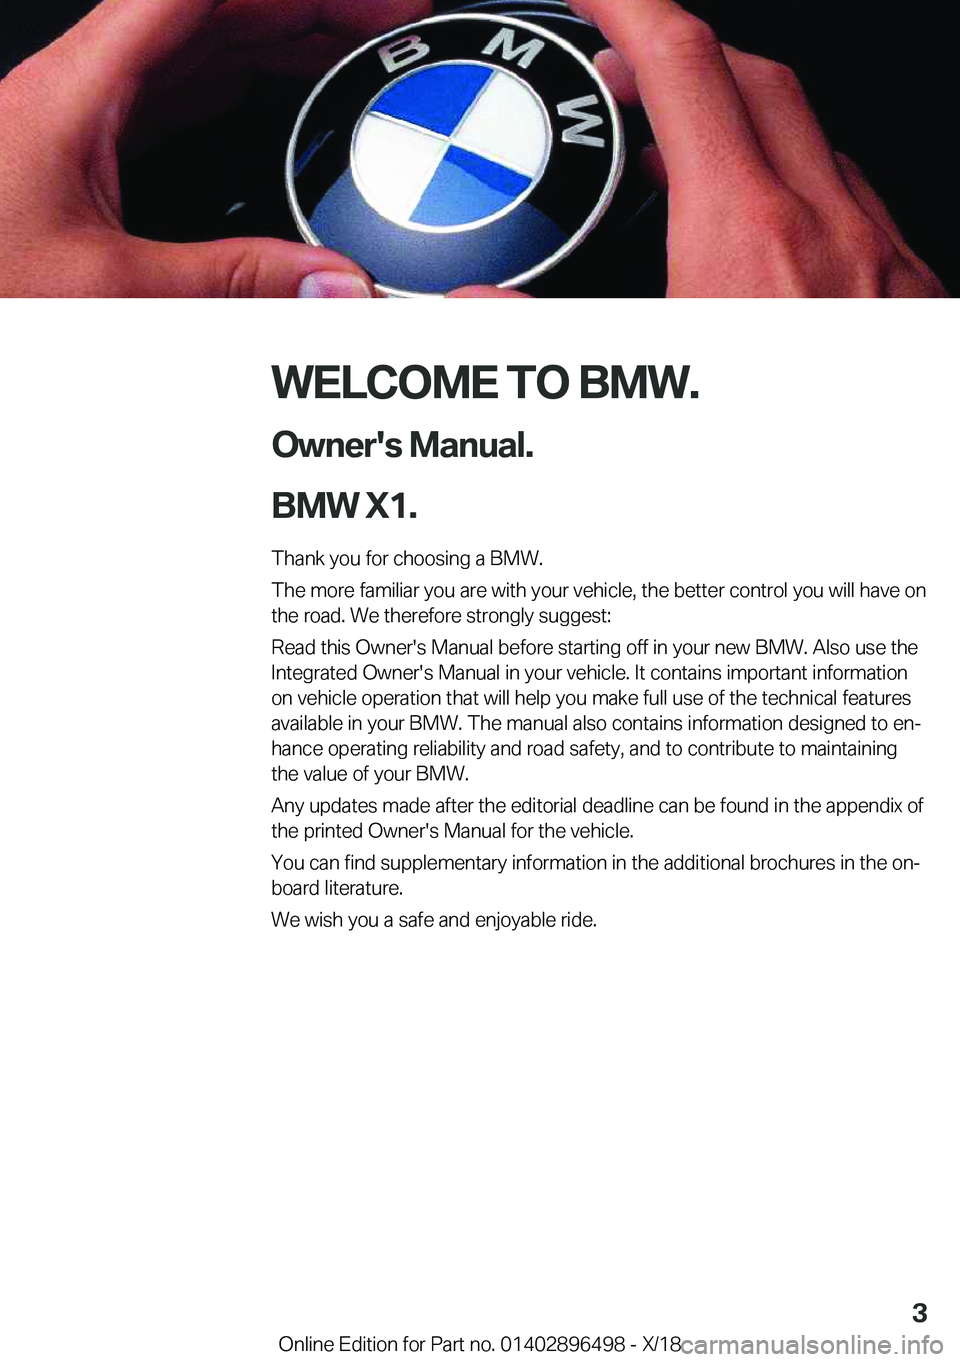 BMW X1 2019  Owners Manual �W�E�L�C�O�M�E��T�O��B�M�W�.�O�w�n�e�r�'�s��M�a�n�u�a�l�.
�B�M�W��X�1�.
�T�h�a�n�k��y�o�u��f�o�r��c�h�o�o�s�i�n�g��a��B�M�W�.
�T�h�e��m�o�r�e��f�a�m�i�l�i�a�r��y�o�u��a�r�e��w�i�t�h�